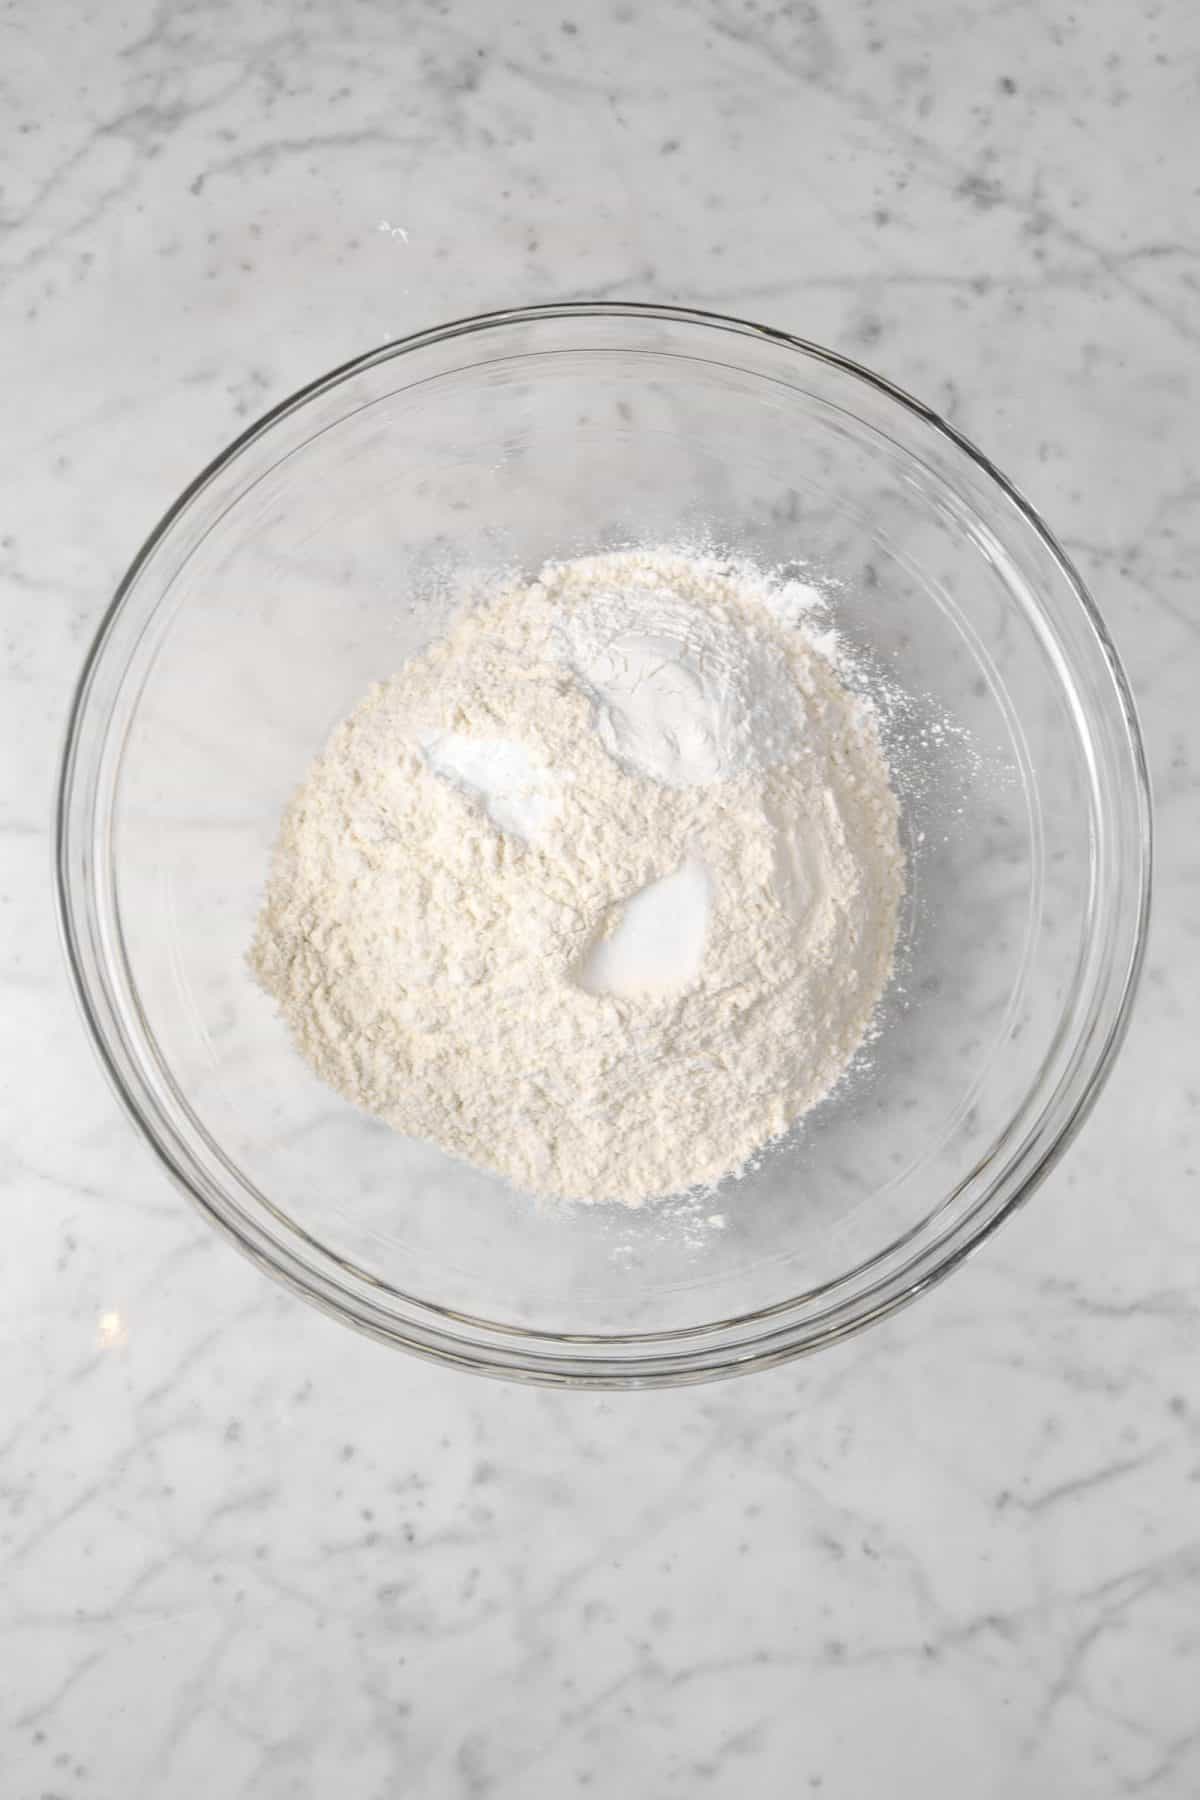 flour, salt, baking powder, and baking soda in a glass bowl